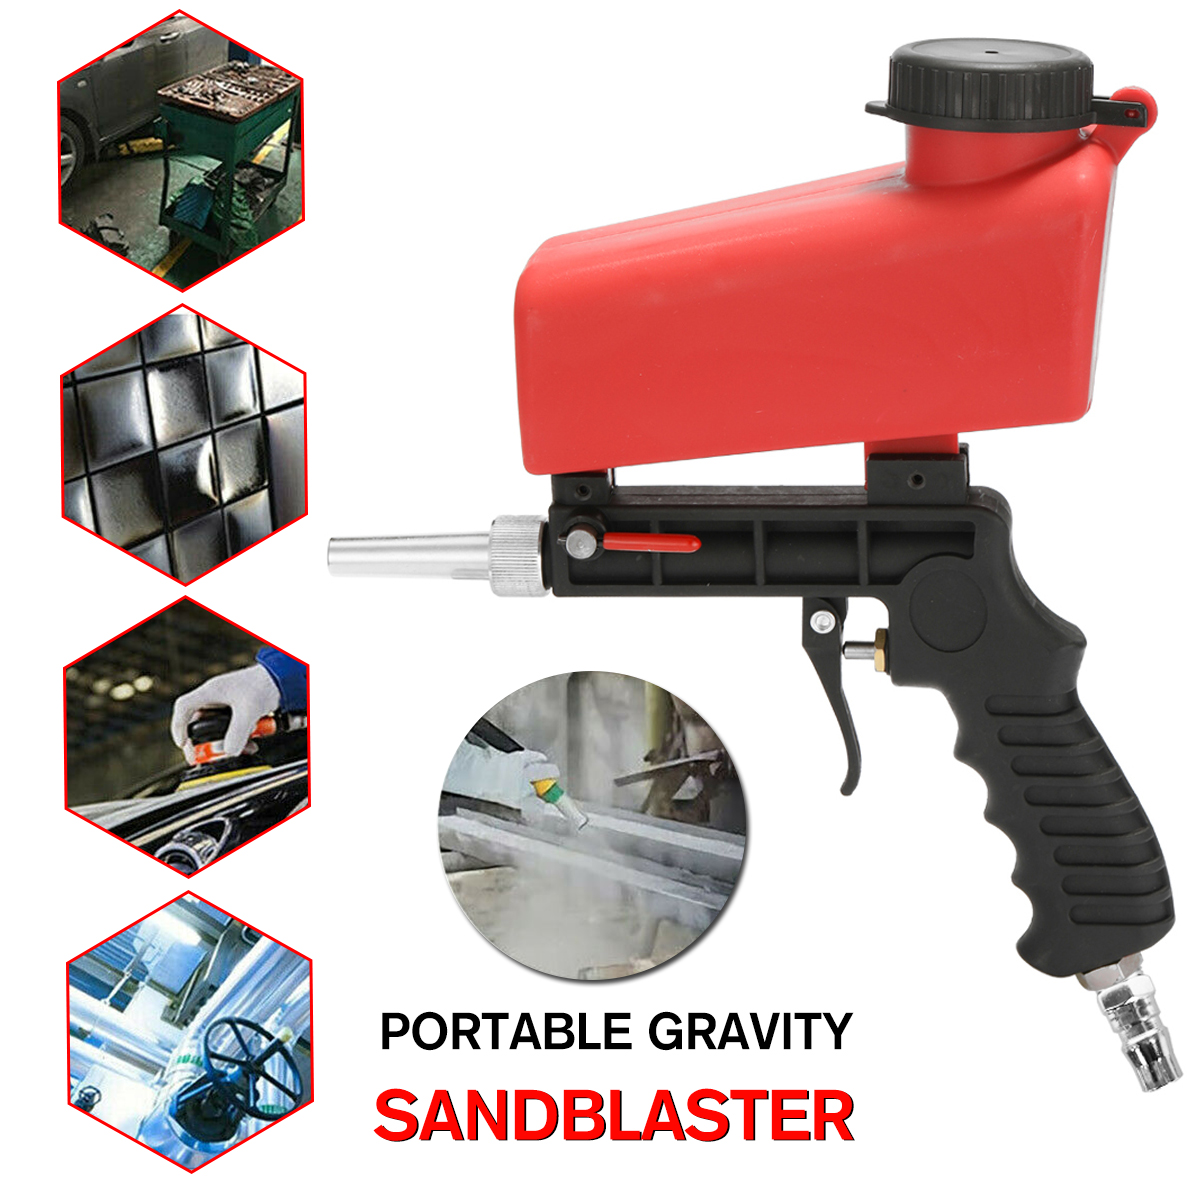 Find Portable Gravity Pneumatic Sandblaster Sprayer Tool Sandblasting Machine Removing Spot Rust for Sale on Gipsybee.com with cryptocurrencies